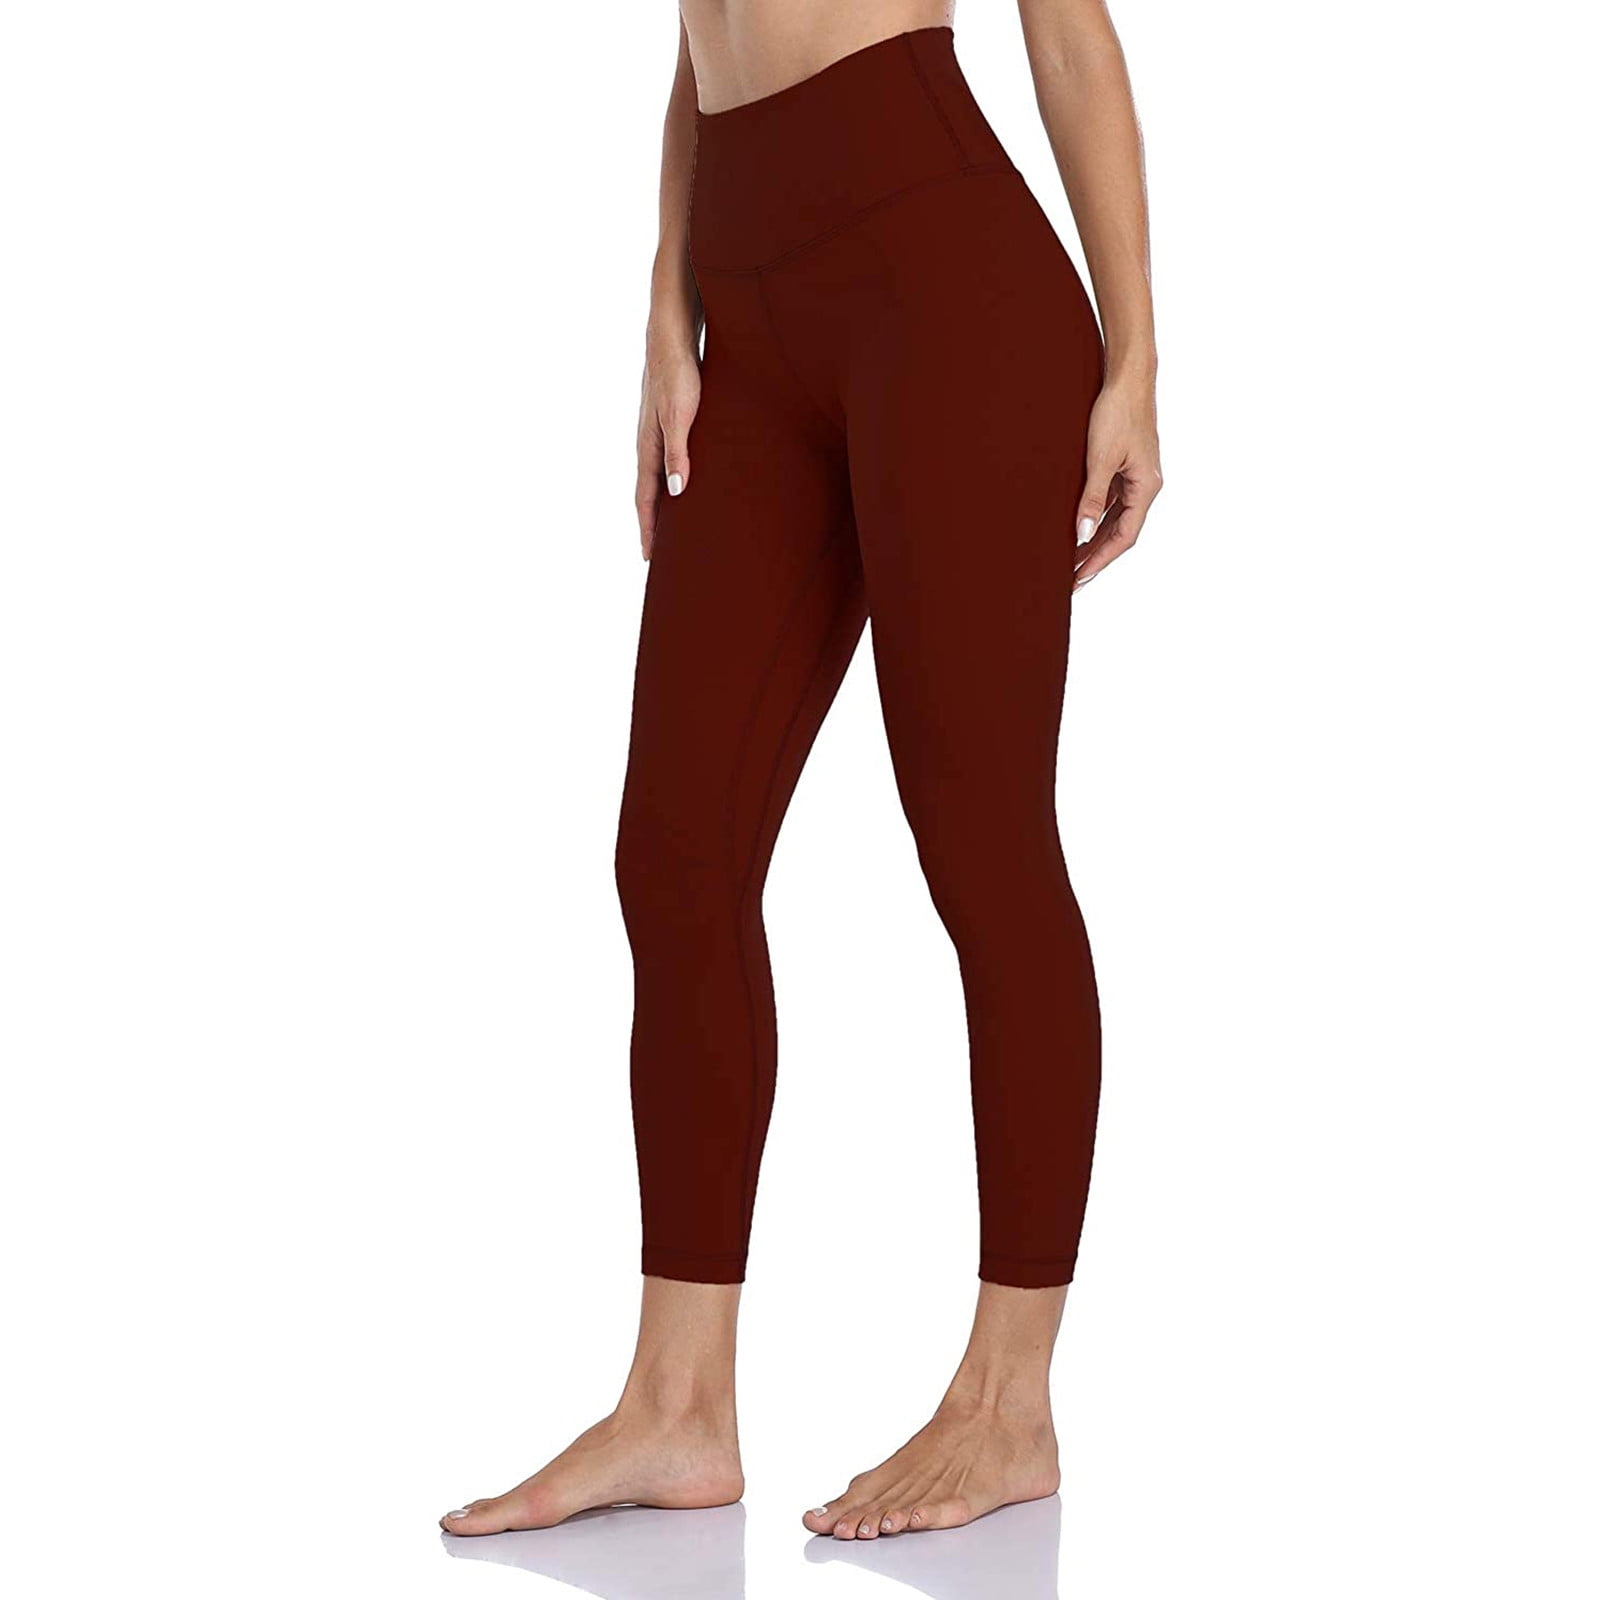 kpoplk Boot Cut Yoga Pants Women,Leggings with Pockets for Women